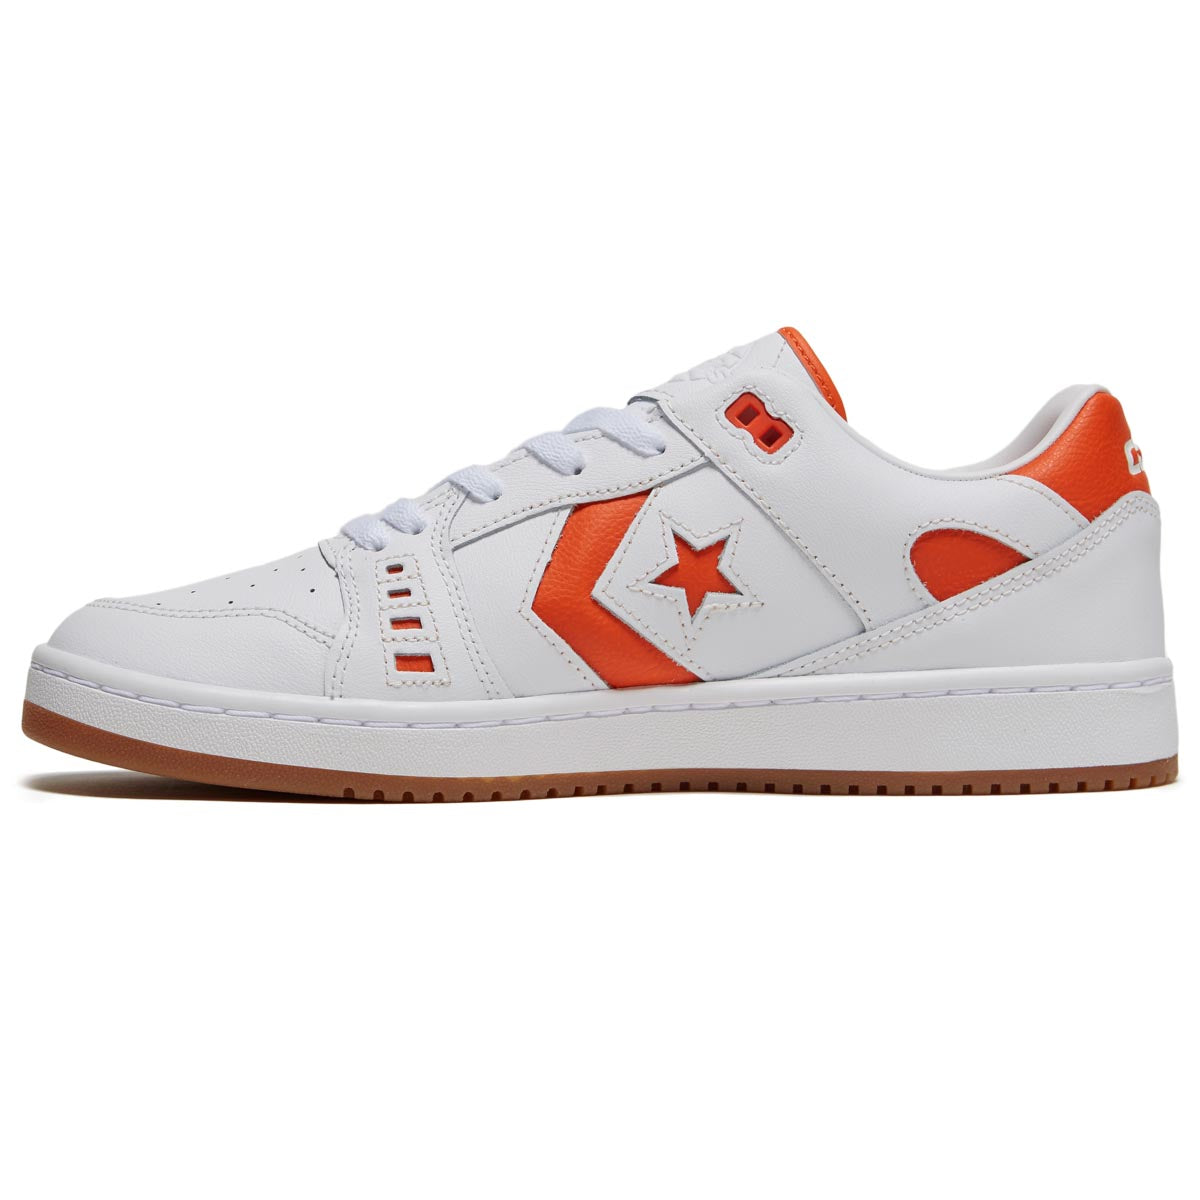 Converse AS-1 Pro Leather Ox Shoes - White/Orange/White image 2